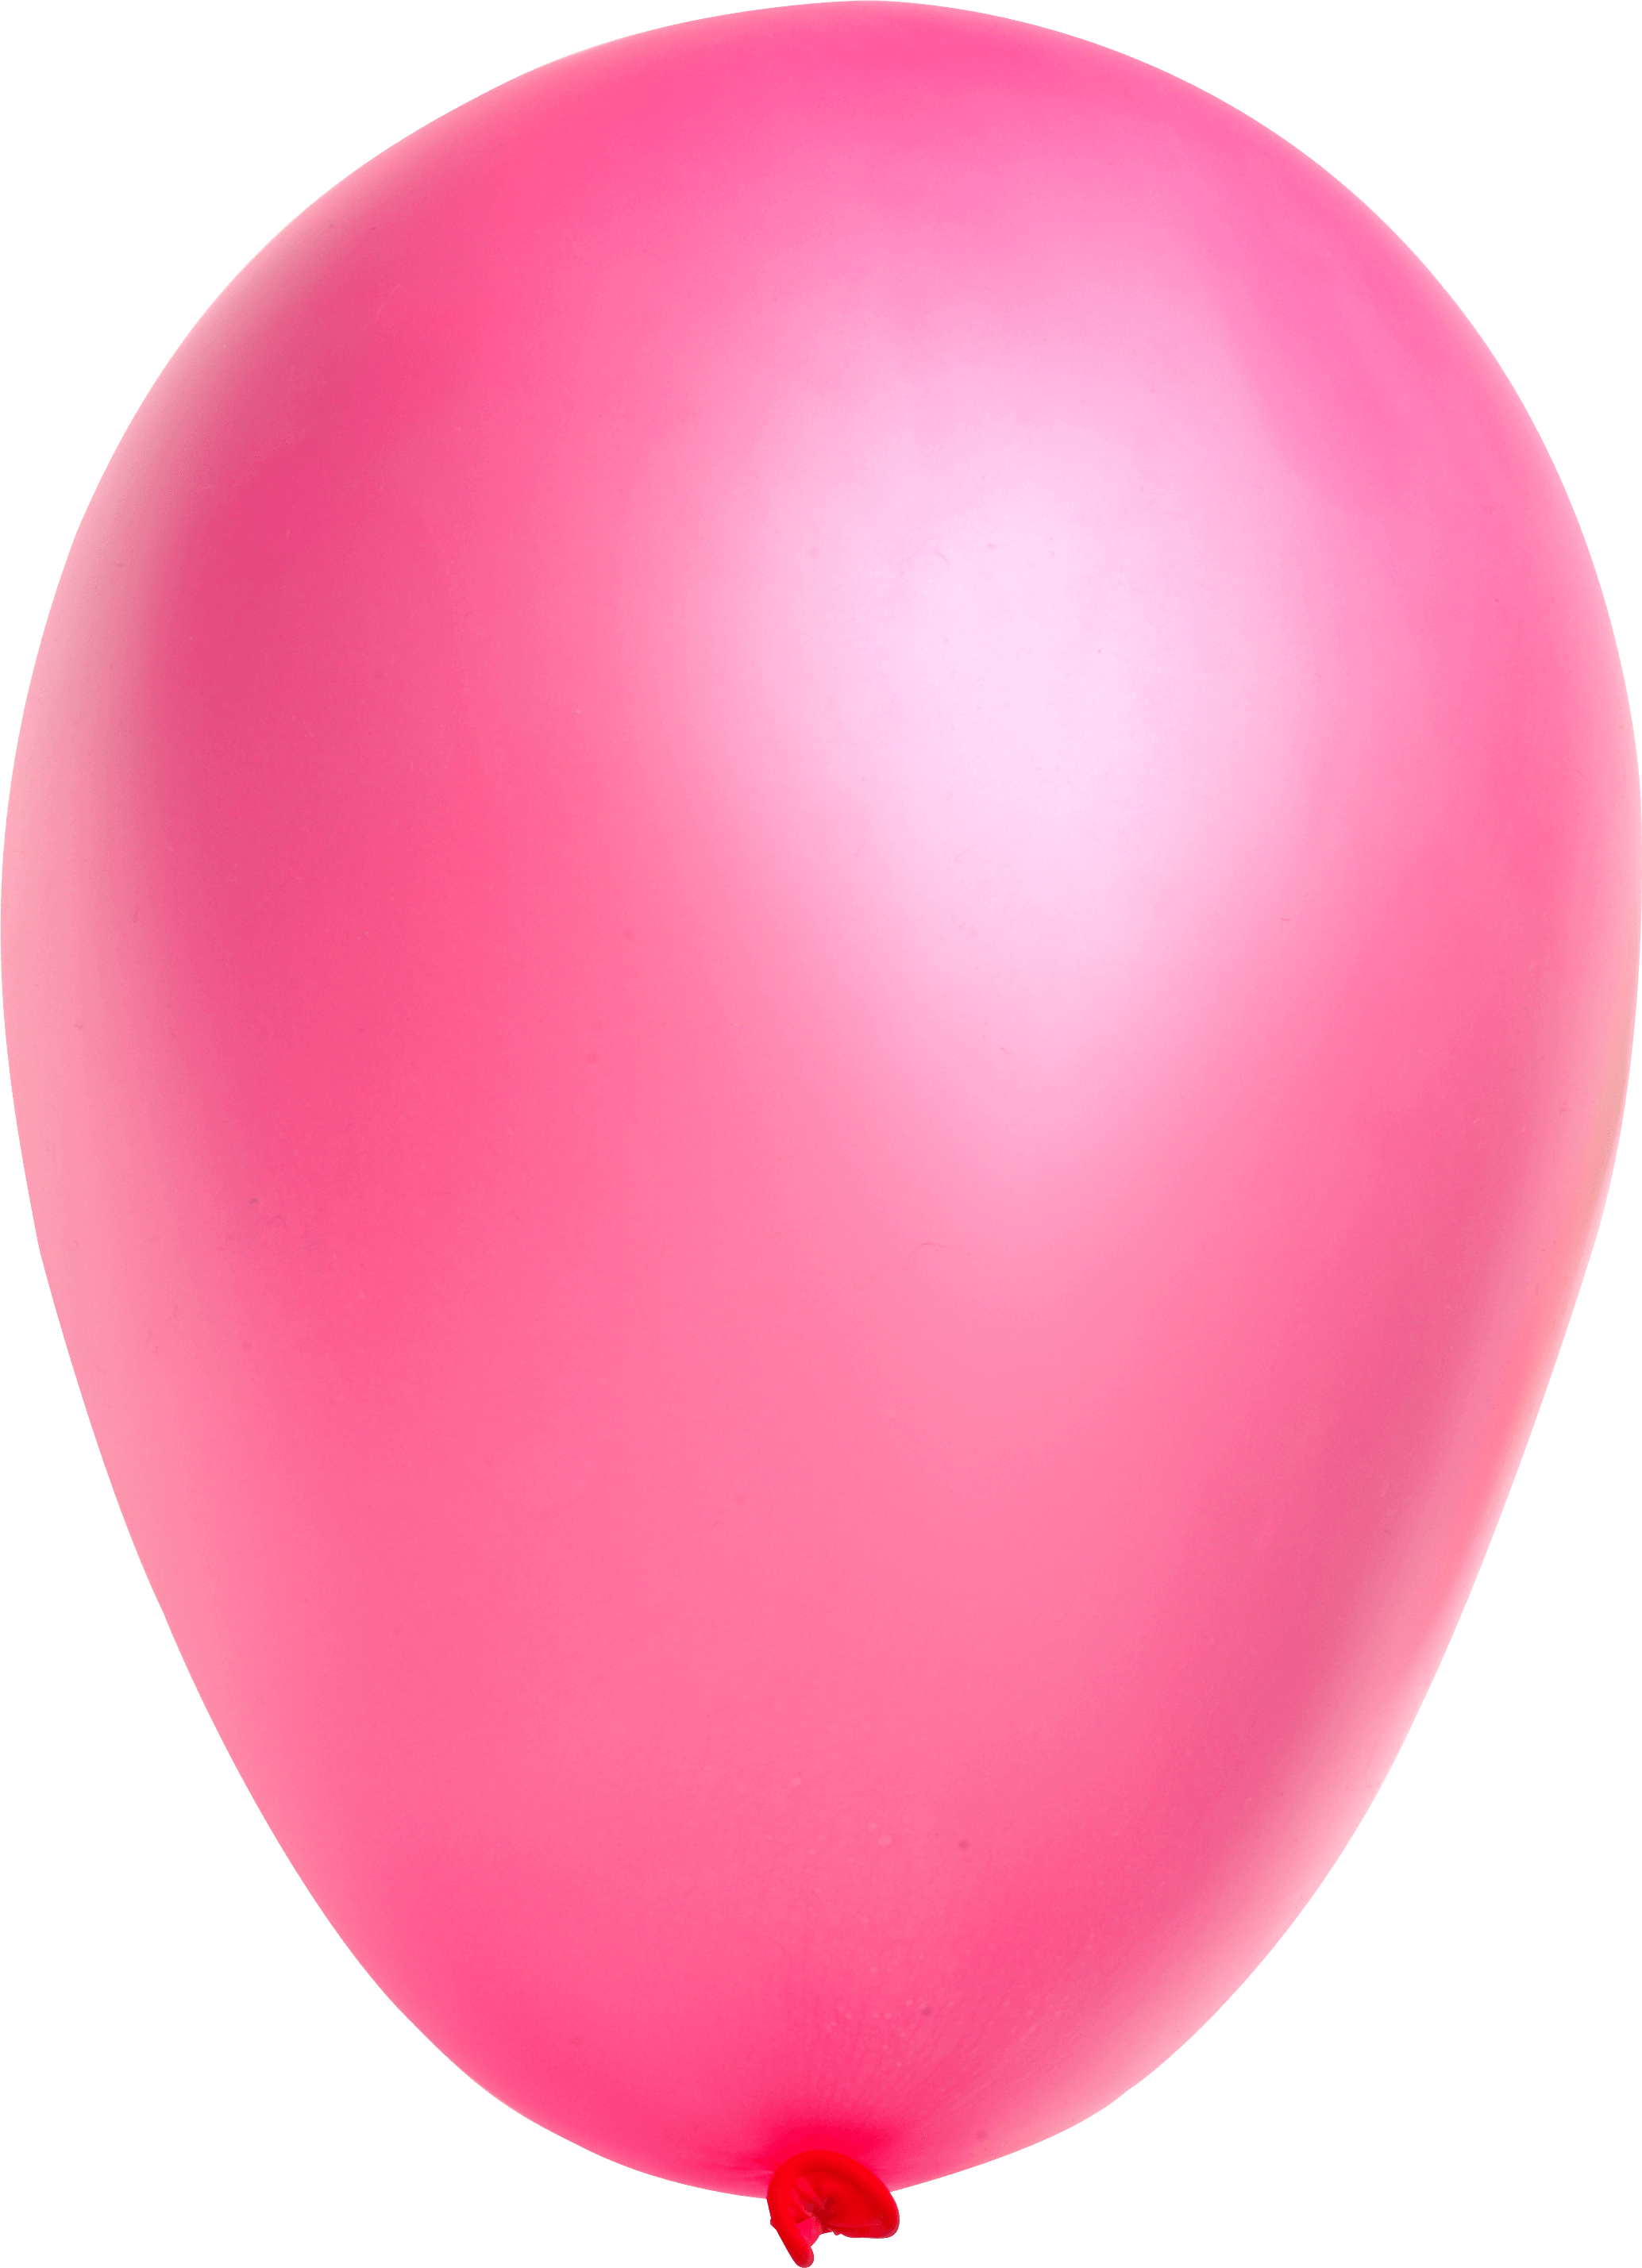 Balloons Png Image PNG Image